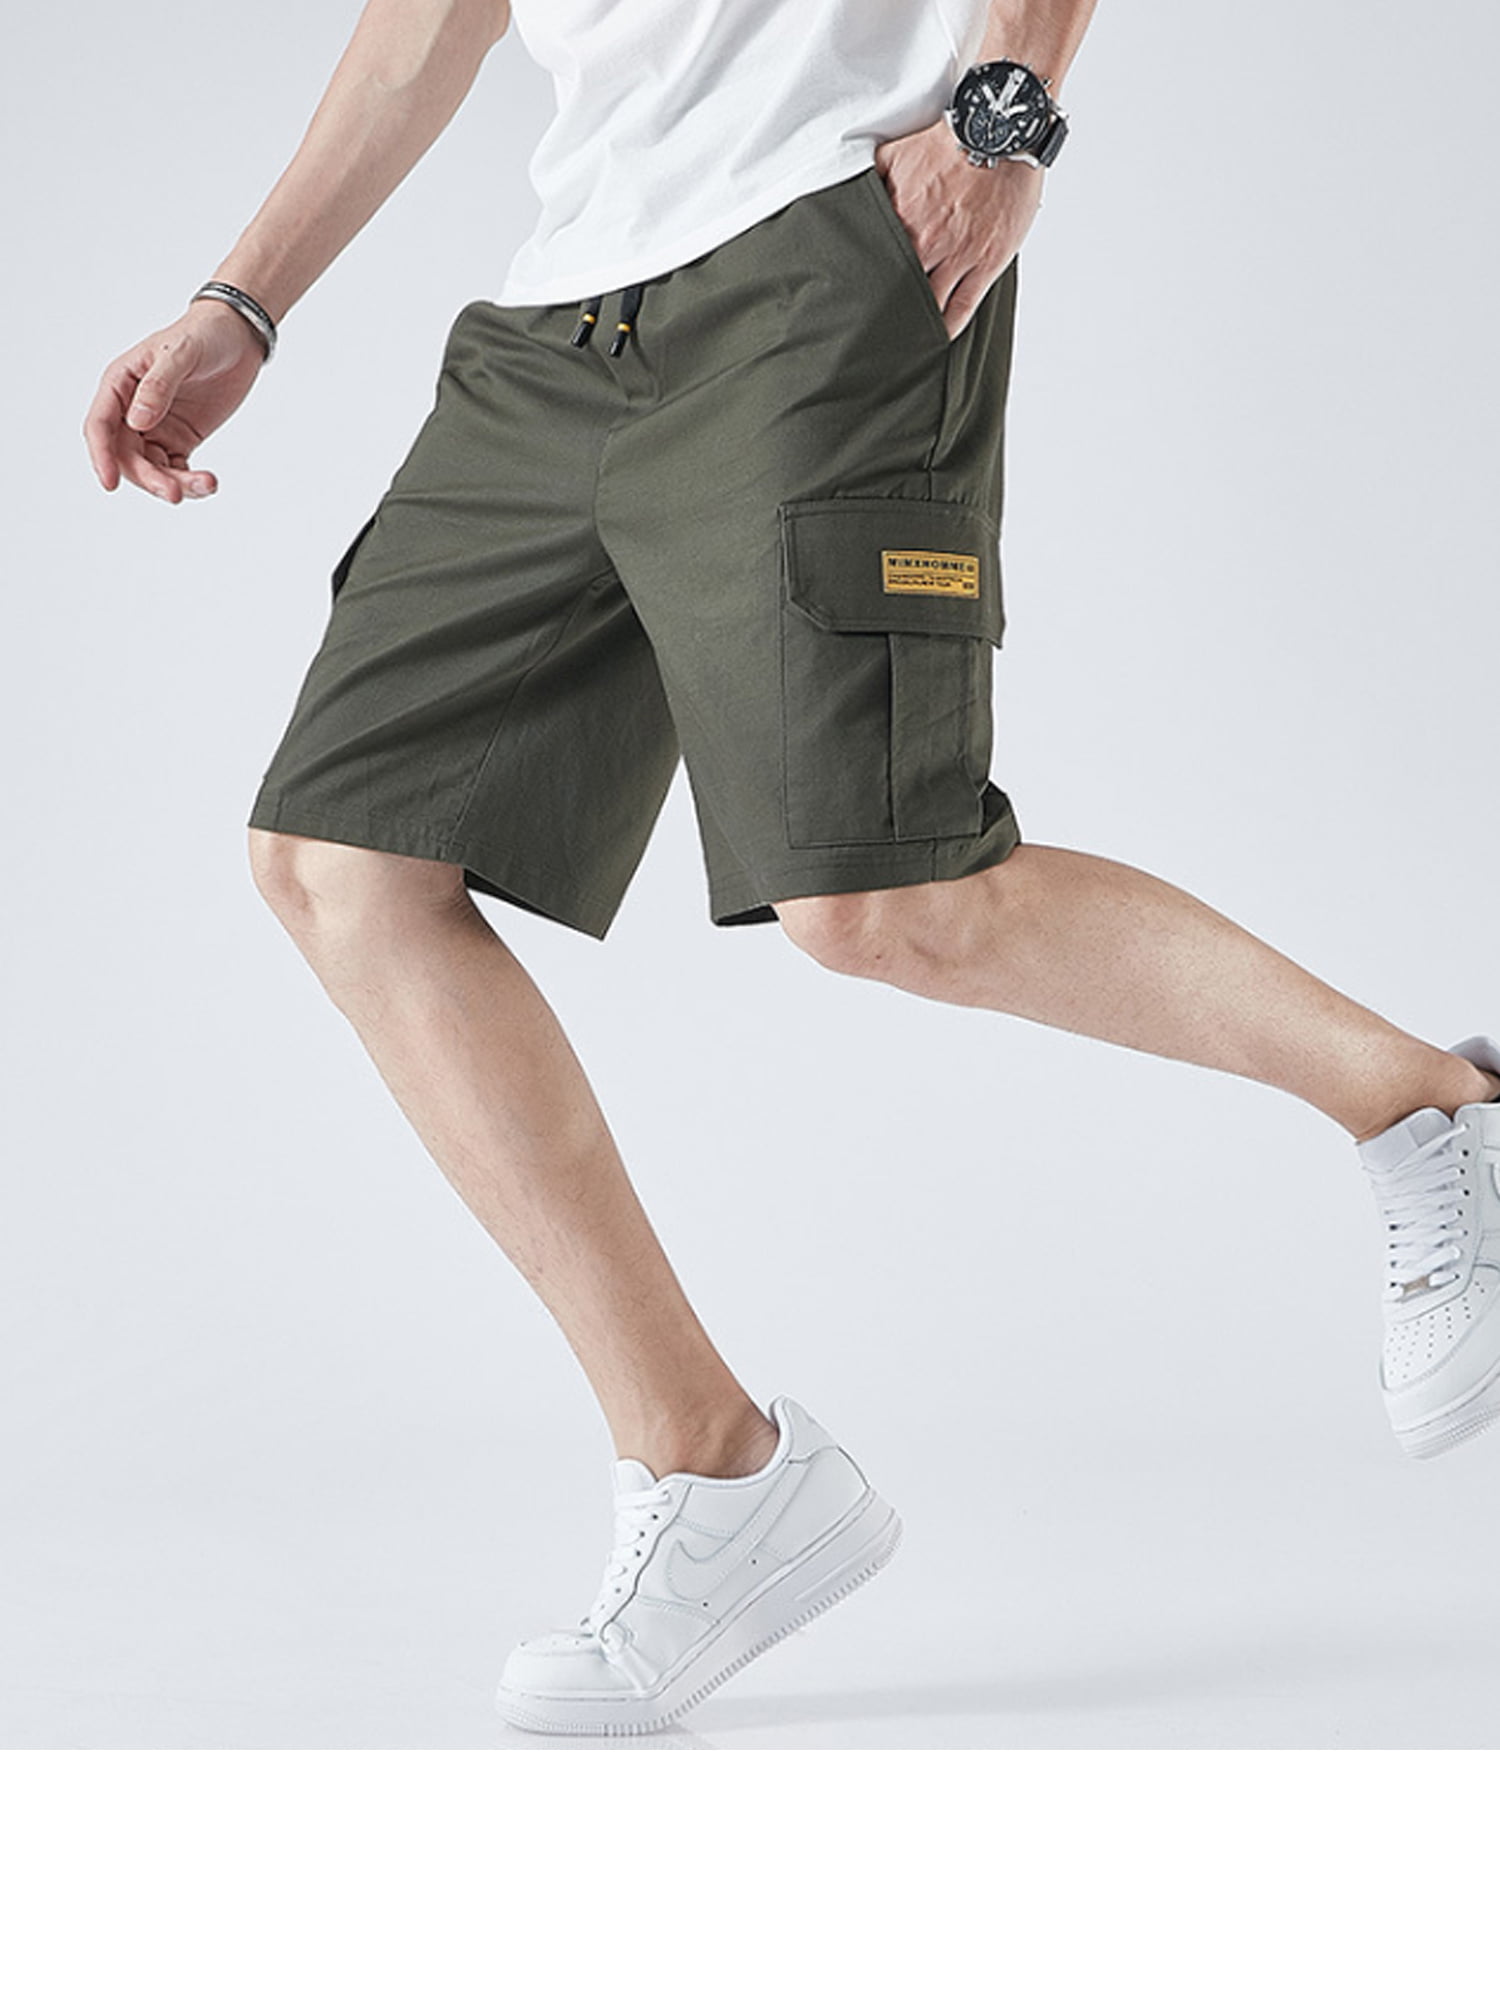 yoyorule Casual Summer Pants Mens Cotton Multi-Pocket Overalls Shorts Fashion Pant